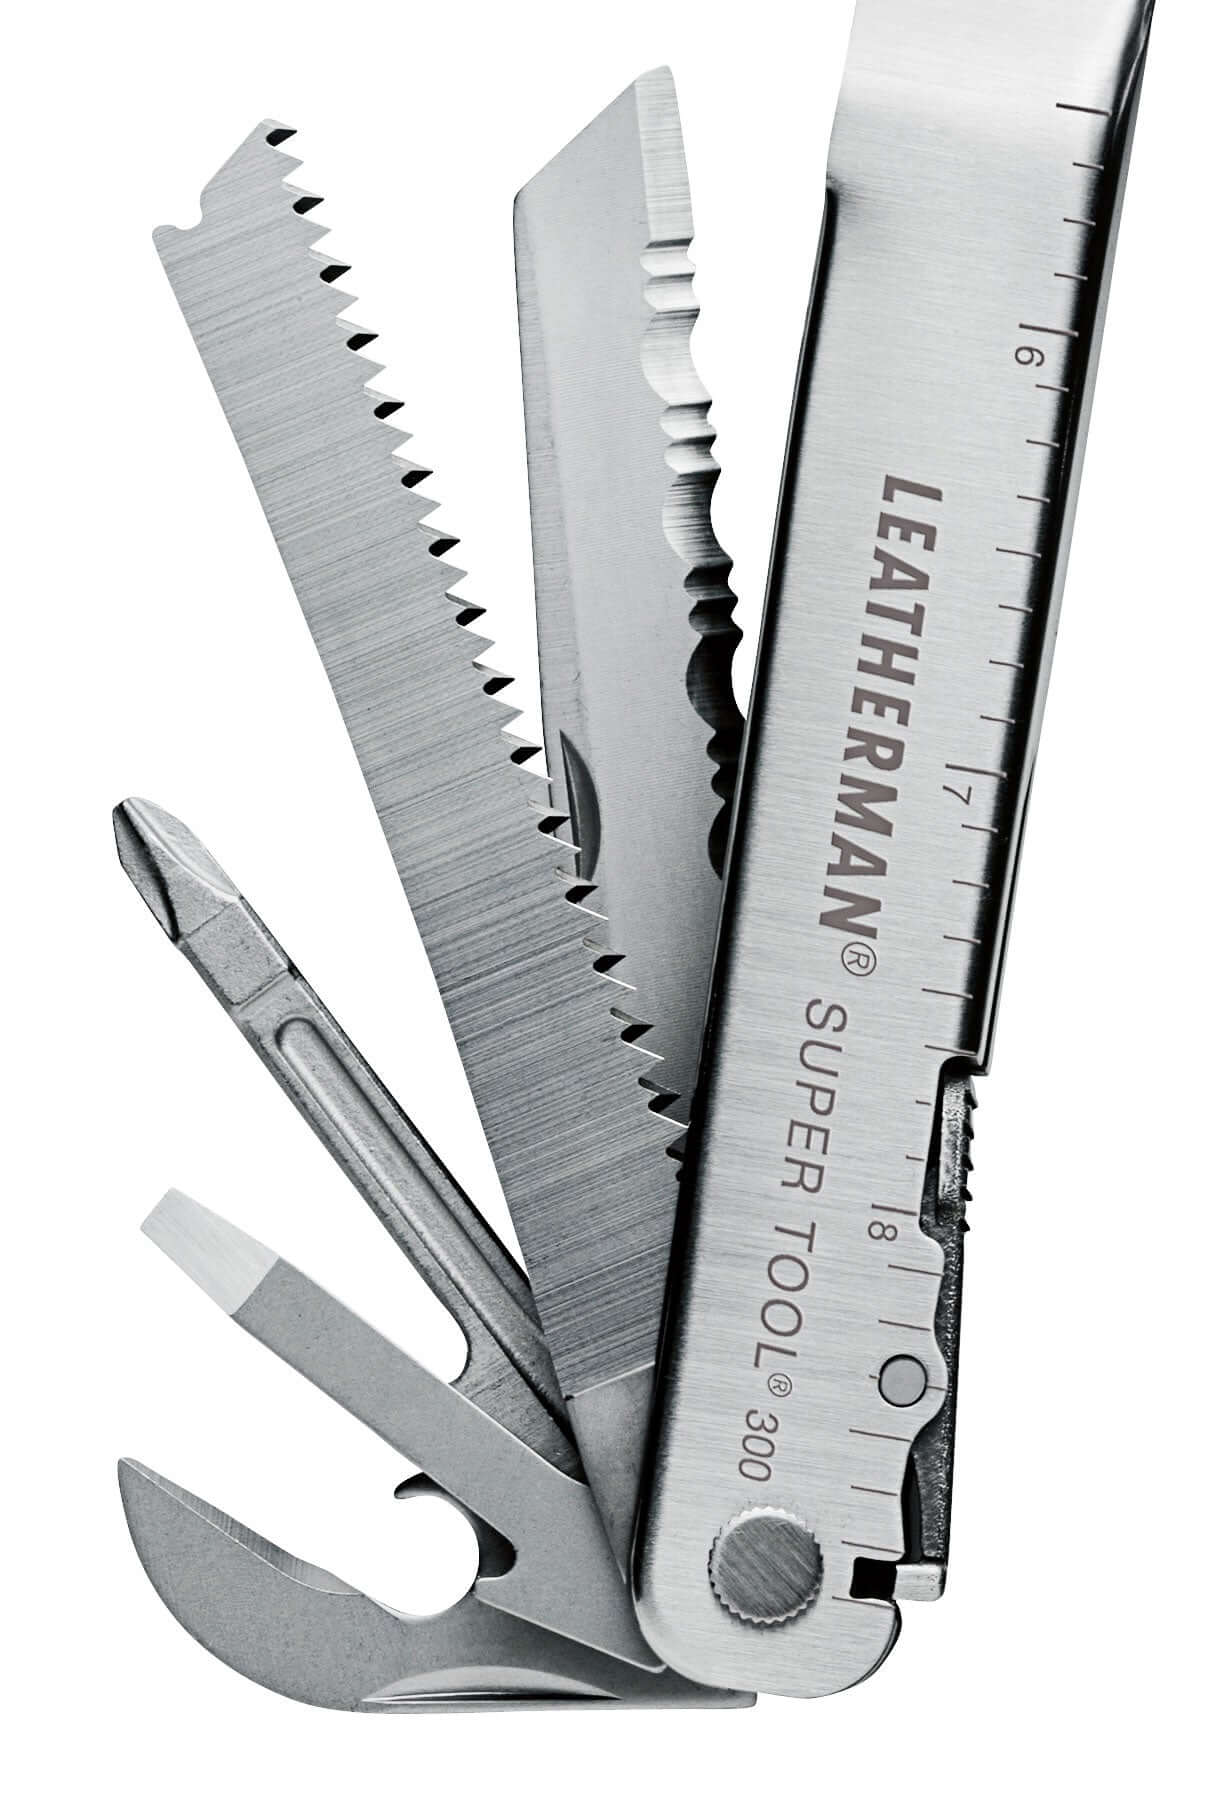 Saw Blades, screwdrivers Super Tool 300 Multi-Tool by Leatherman  